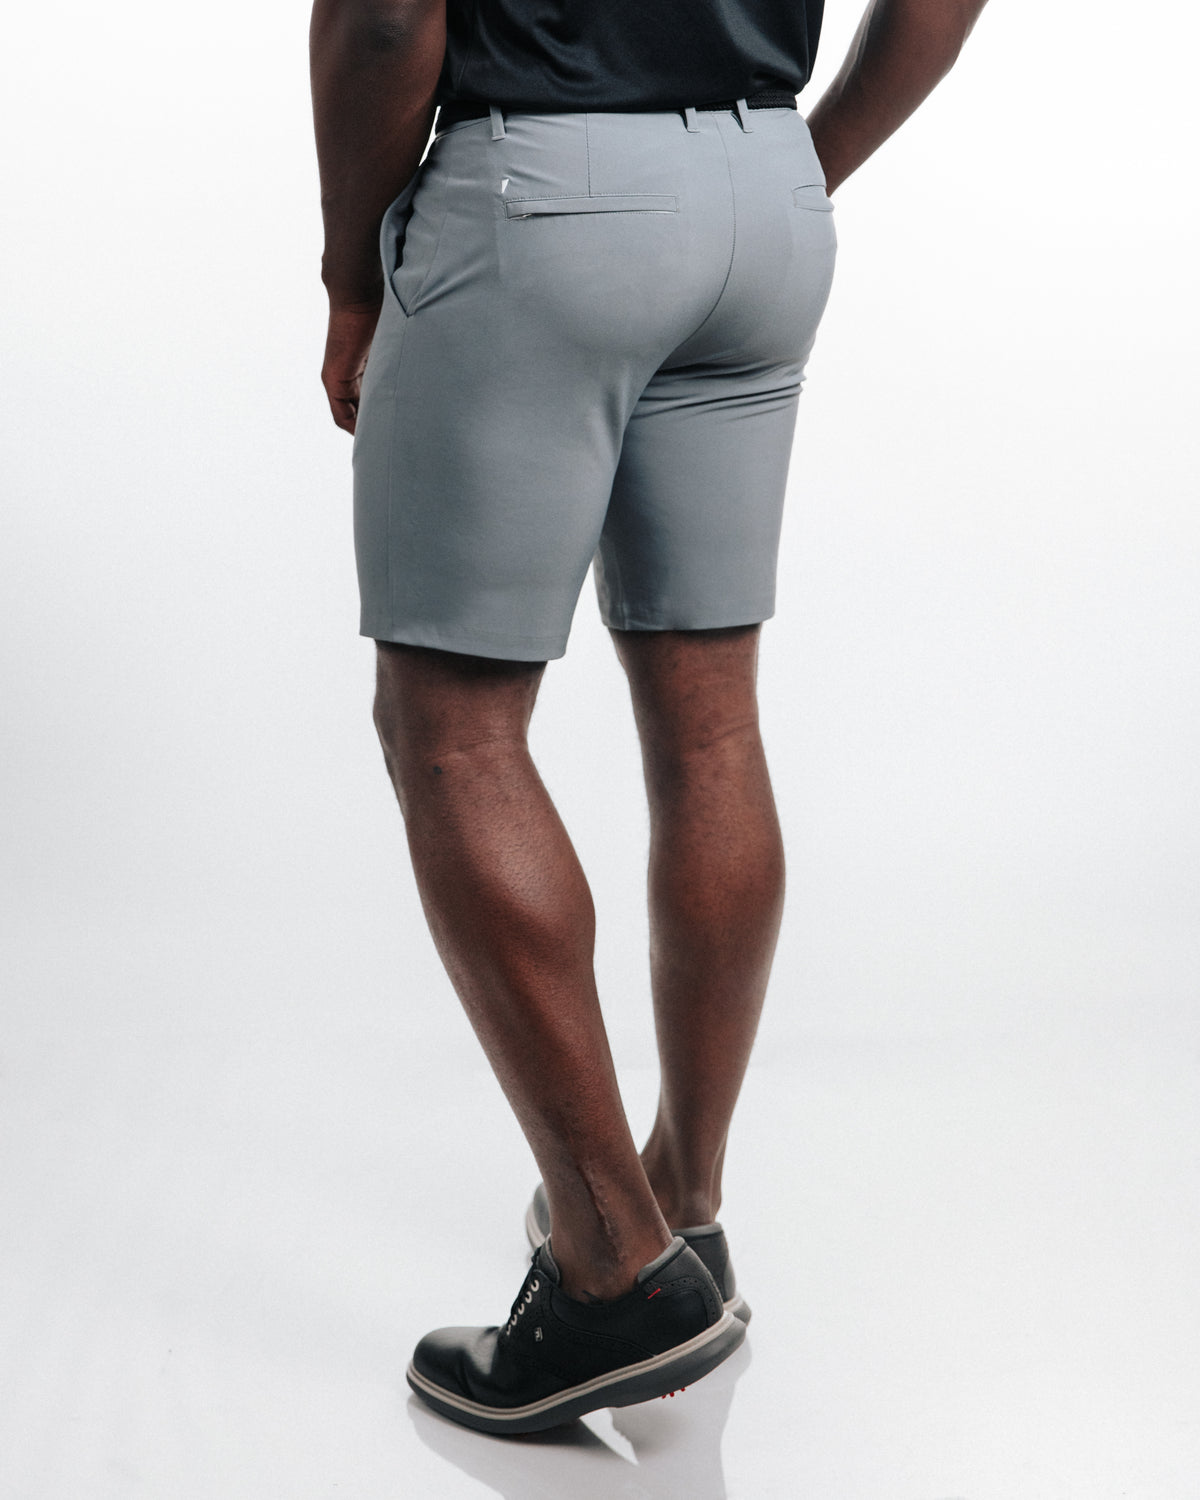 Primo Light Gray Shorts - 7", 9", 11"